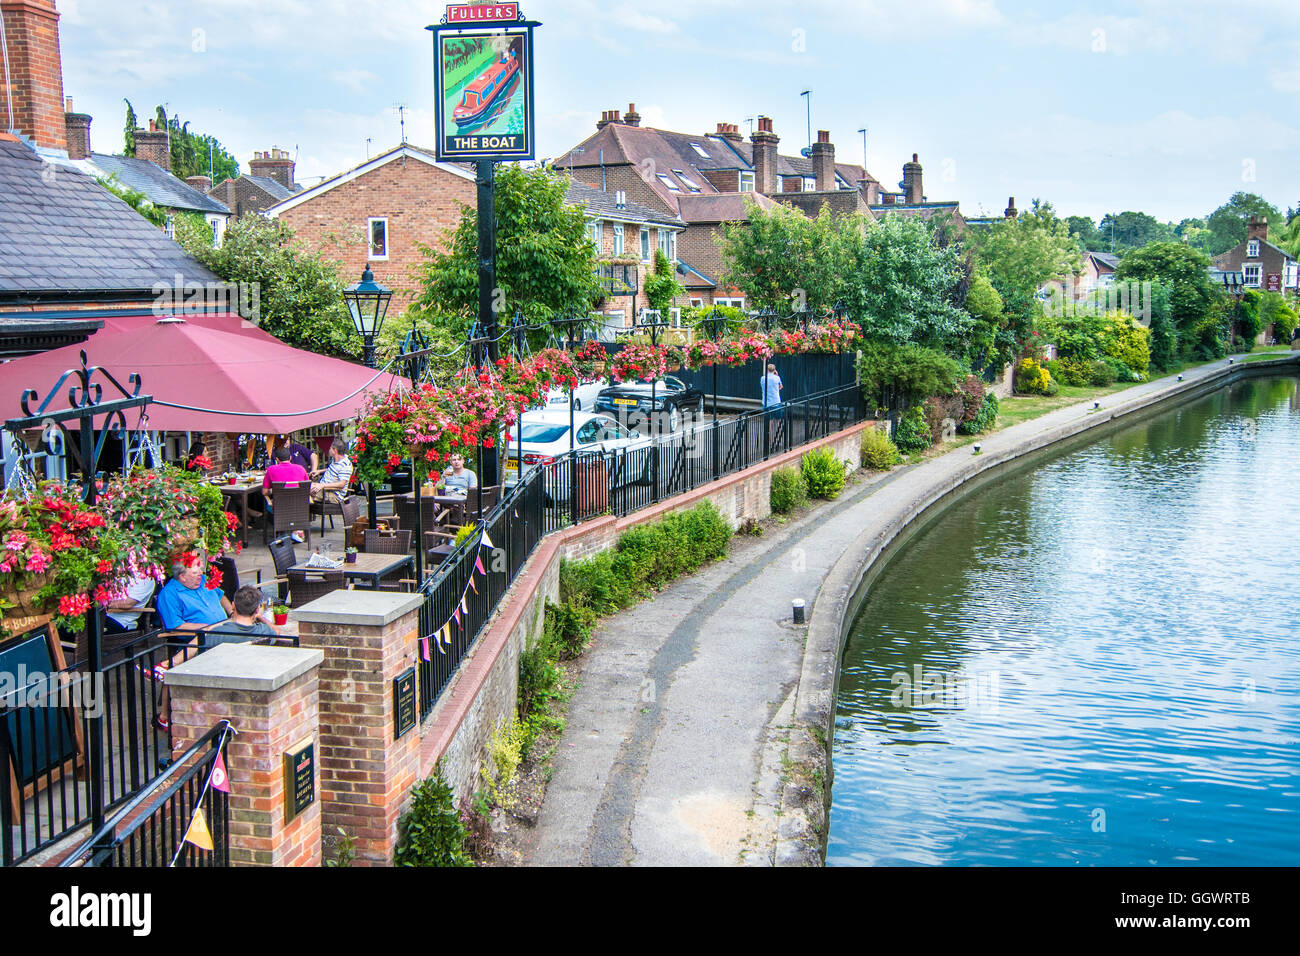 The Boat pub on Grand Union Canal, Berkhamsted, UK Stock Photo